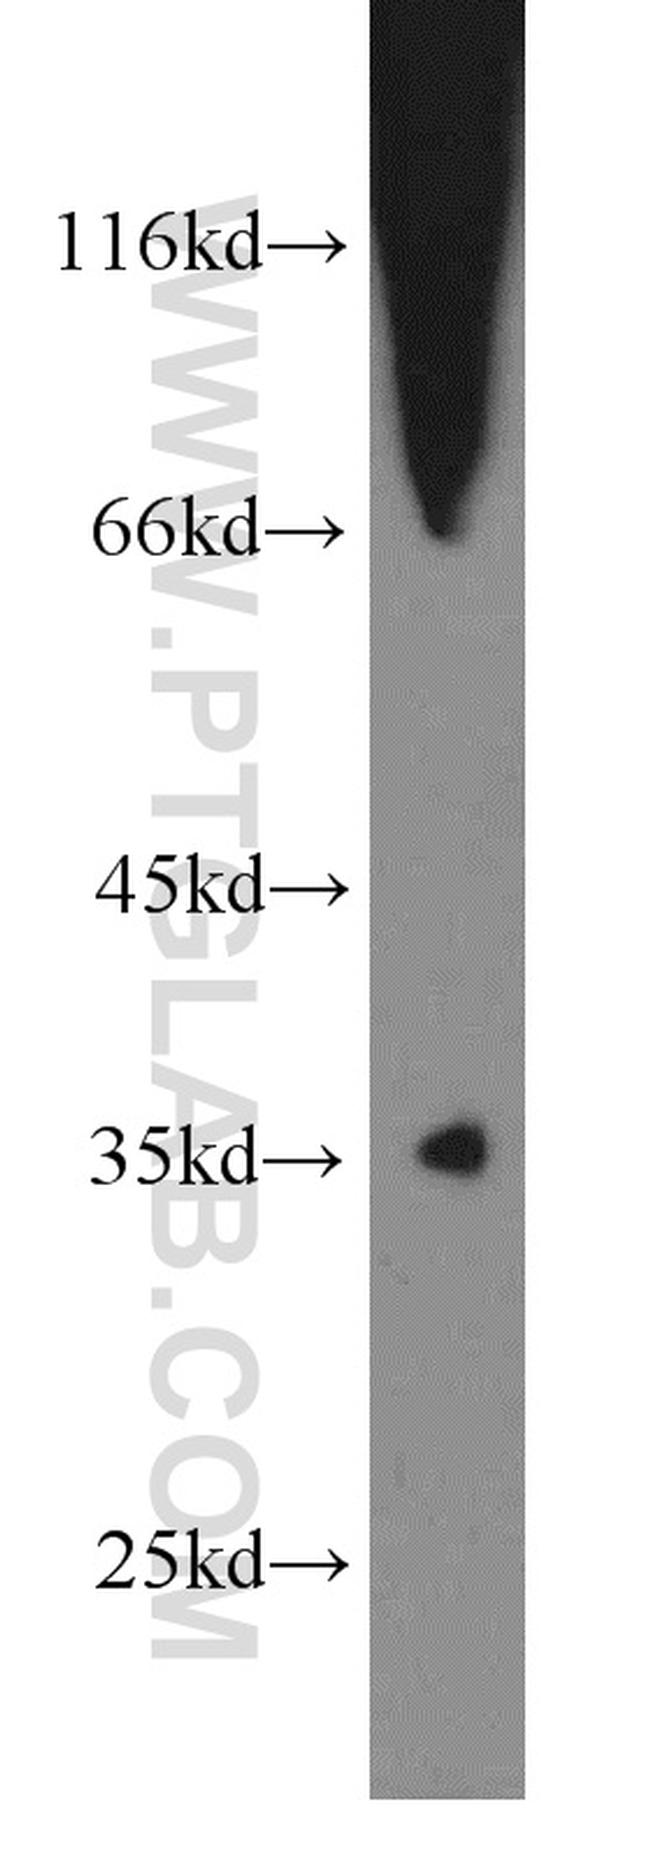 SNX20 Antibody in Western Blot (WB)